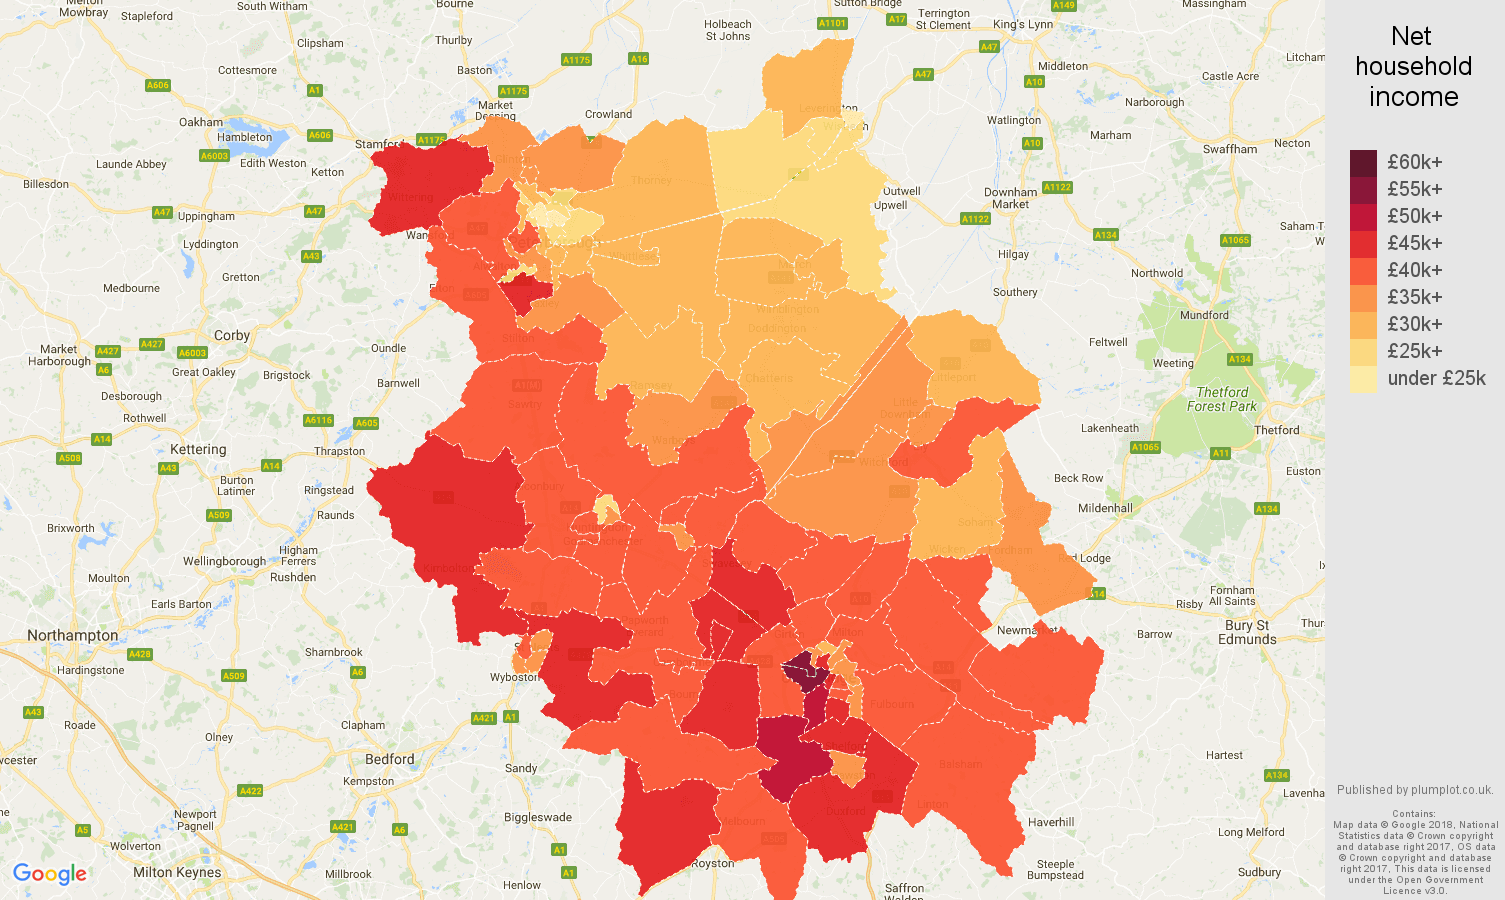 Cambridgeshire net household income map